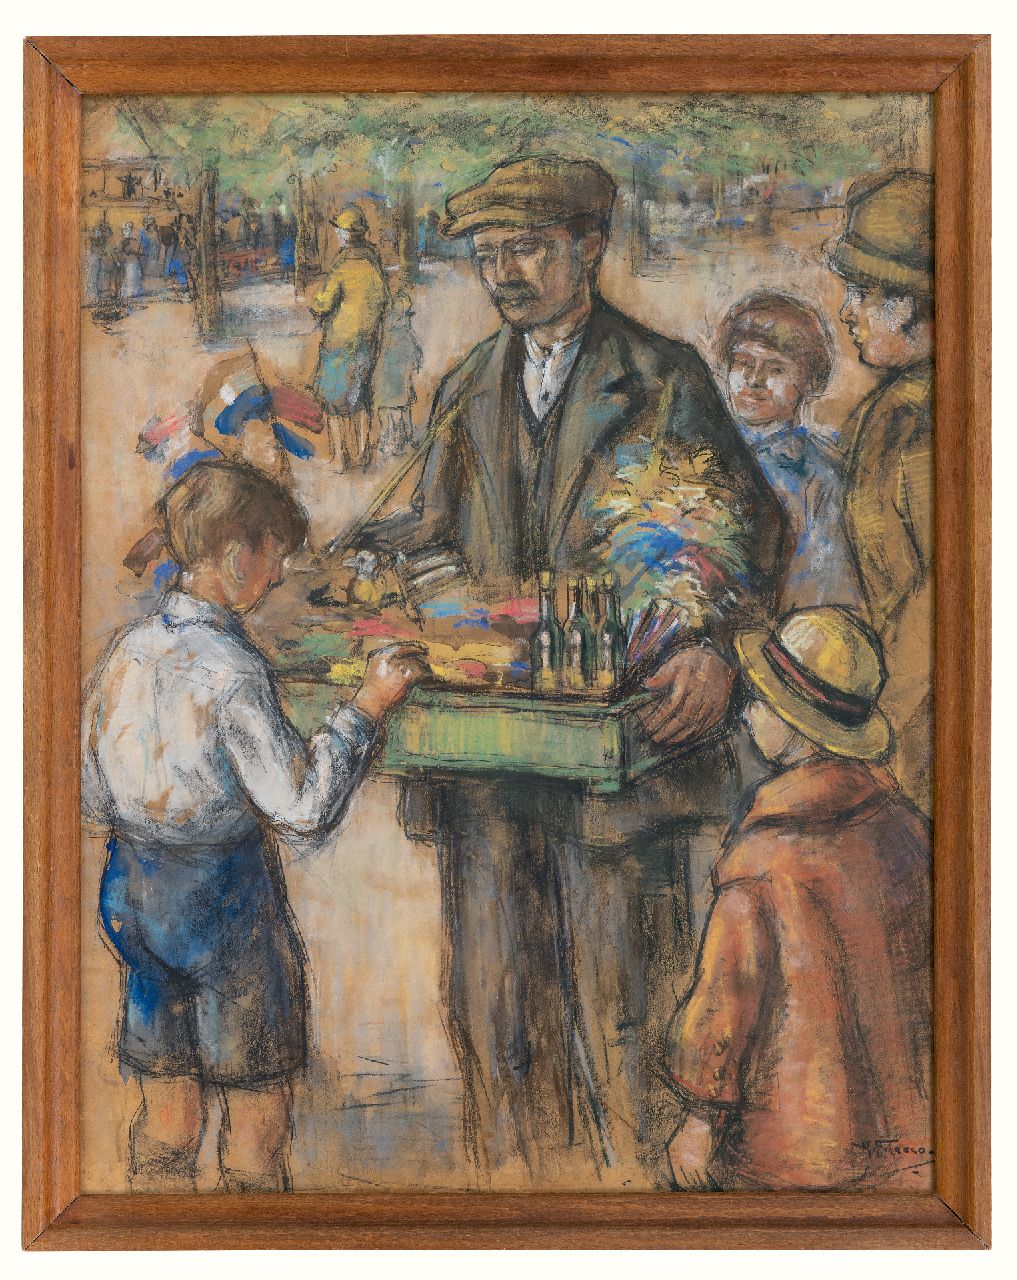 Fresco A.  | Abraham Fresco, Street vendor, pastel on paper 56.9 x 44.0 cm, signed l.r.